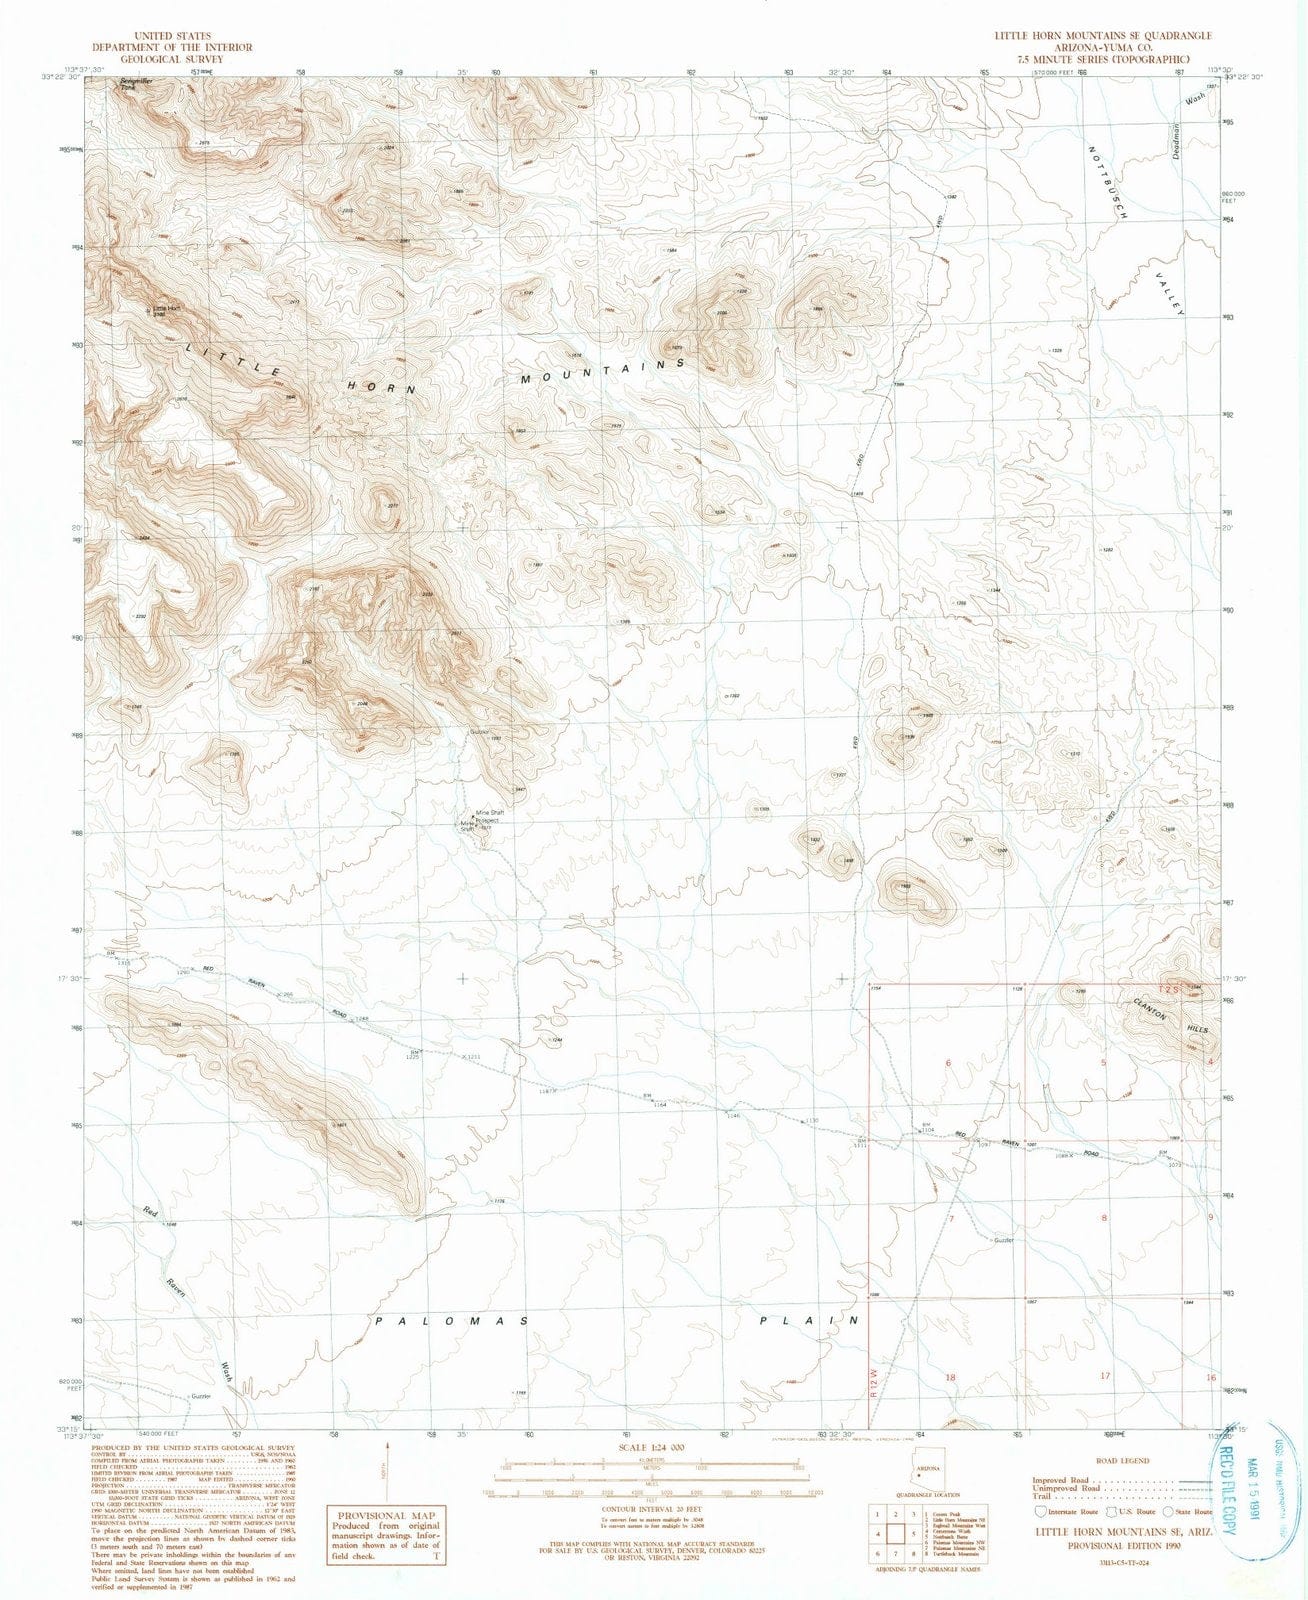 1990 Little Horn Mountains, AZ - Arizona - USGS Topographic Map v2